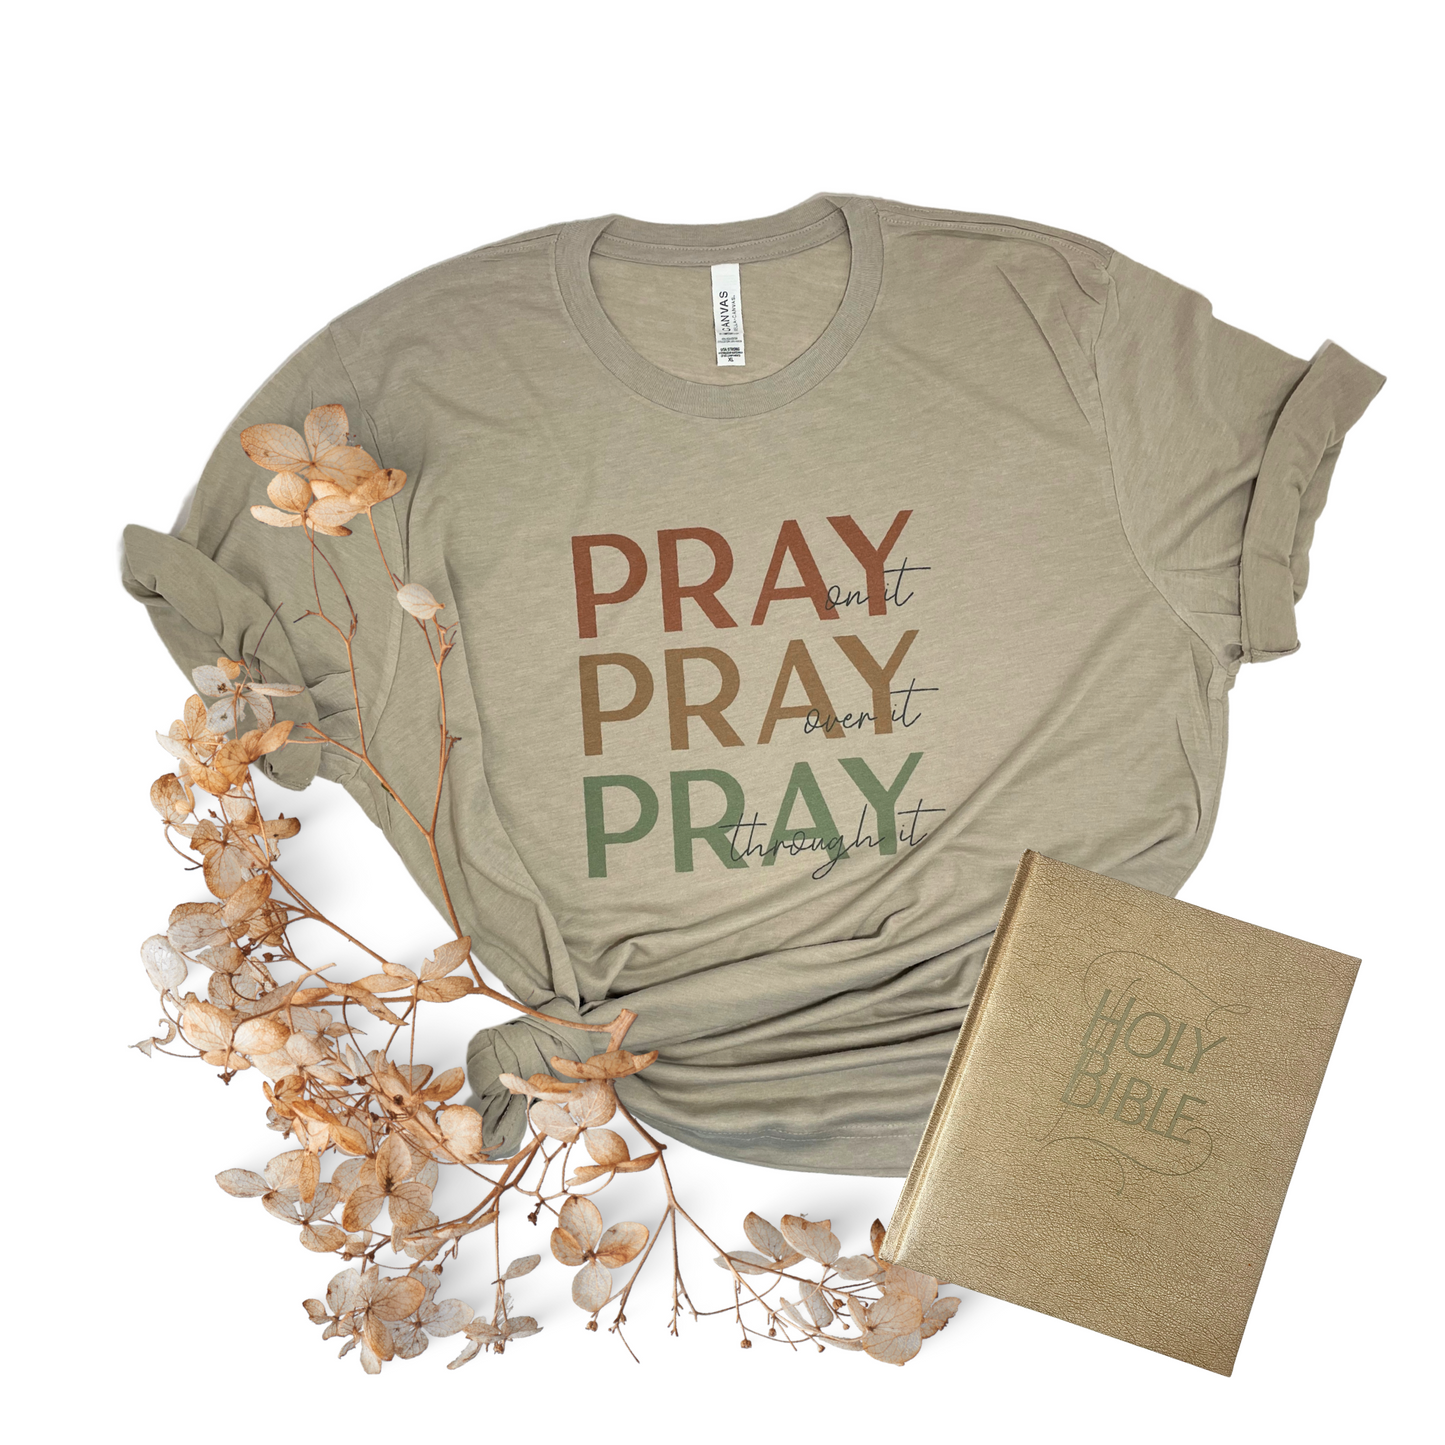 Pray on it, Pray over it, Pray through it - Bella Canvas short sleeve tshirt